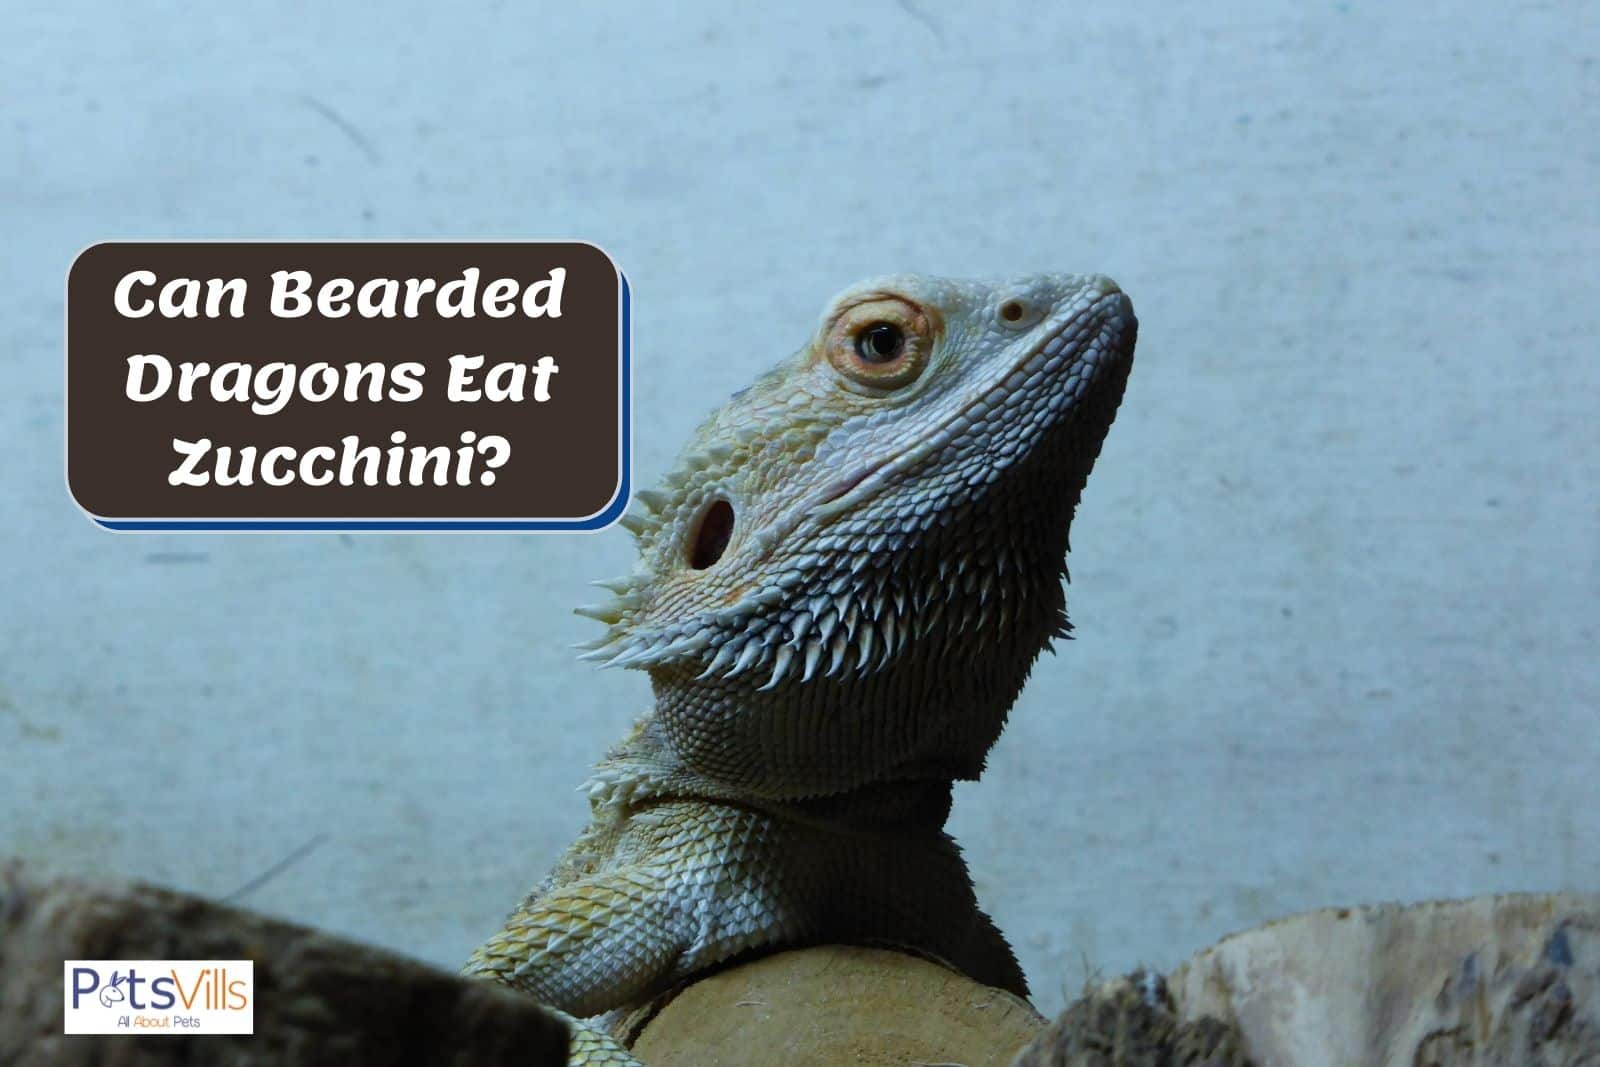 Can Iguanas Eat Zucchini